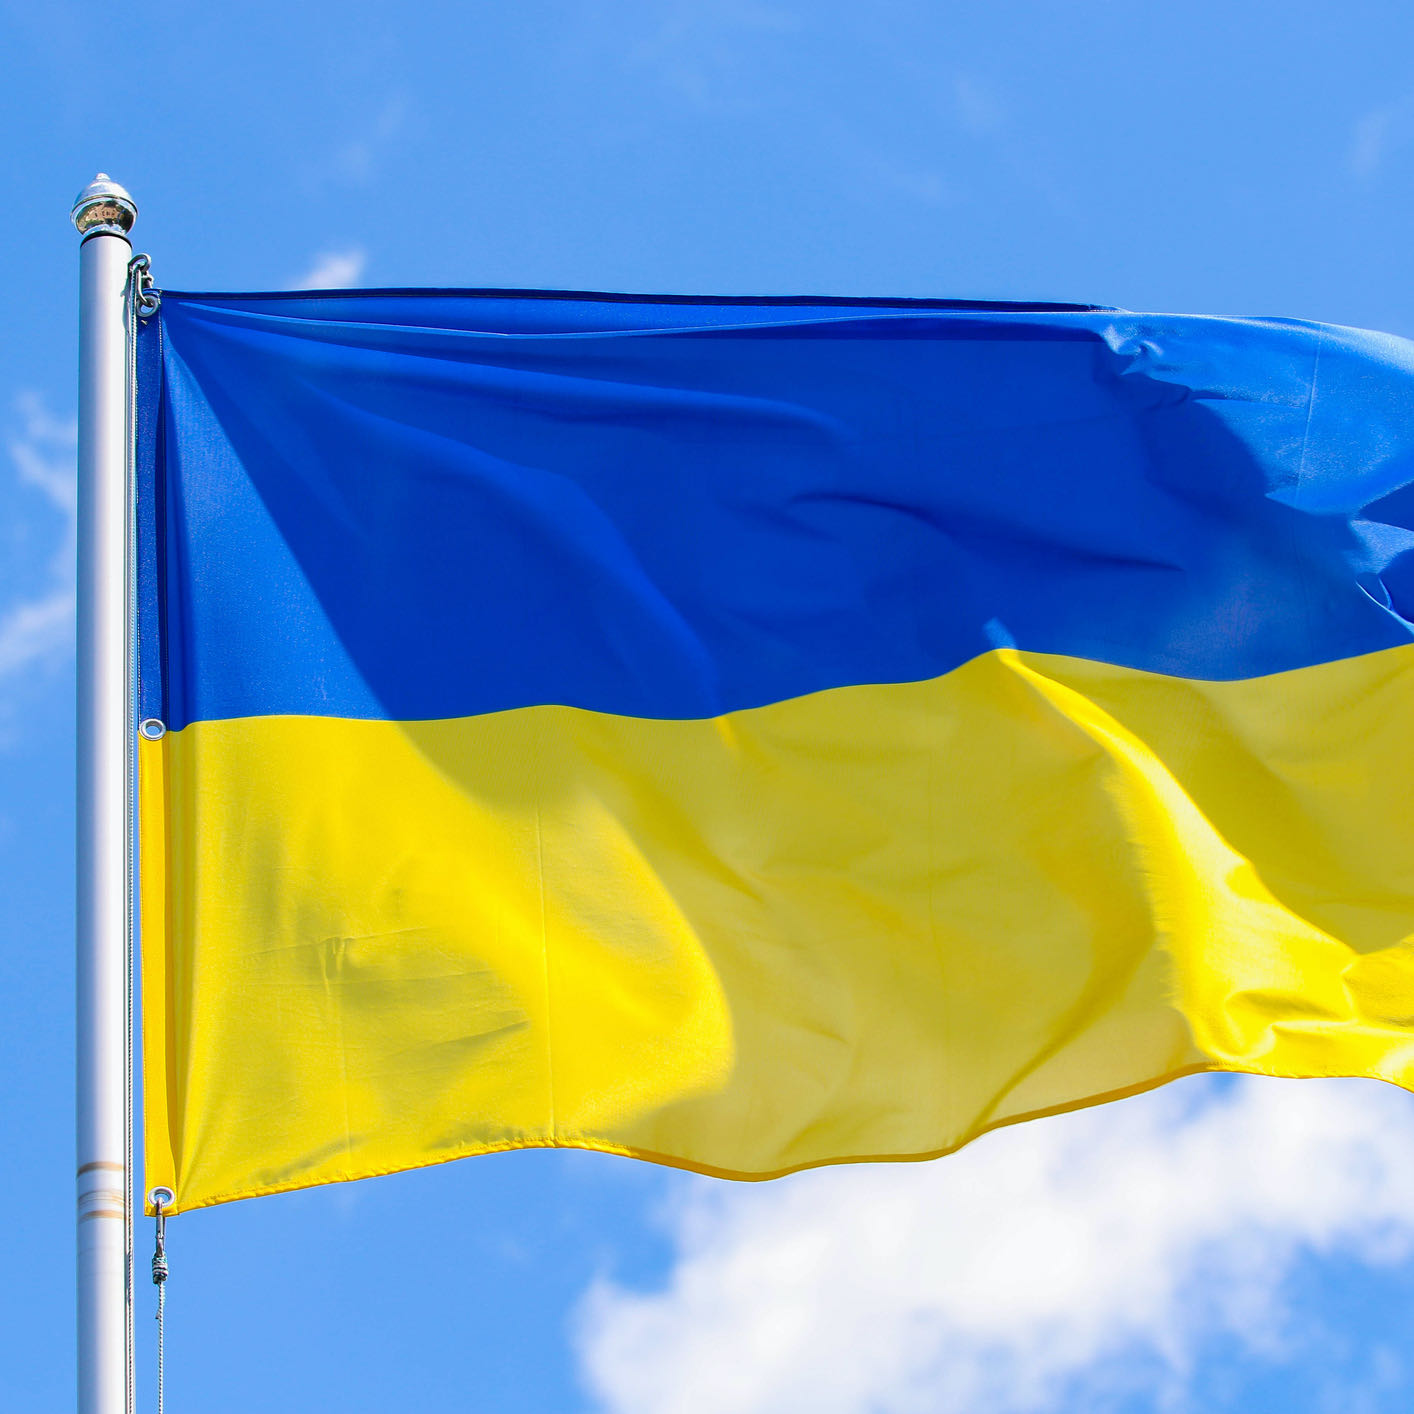 Laurier scholars analyze first year of Ukrainian war